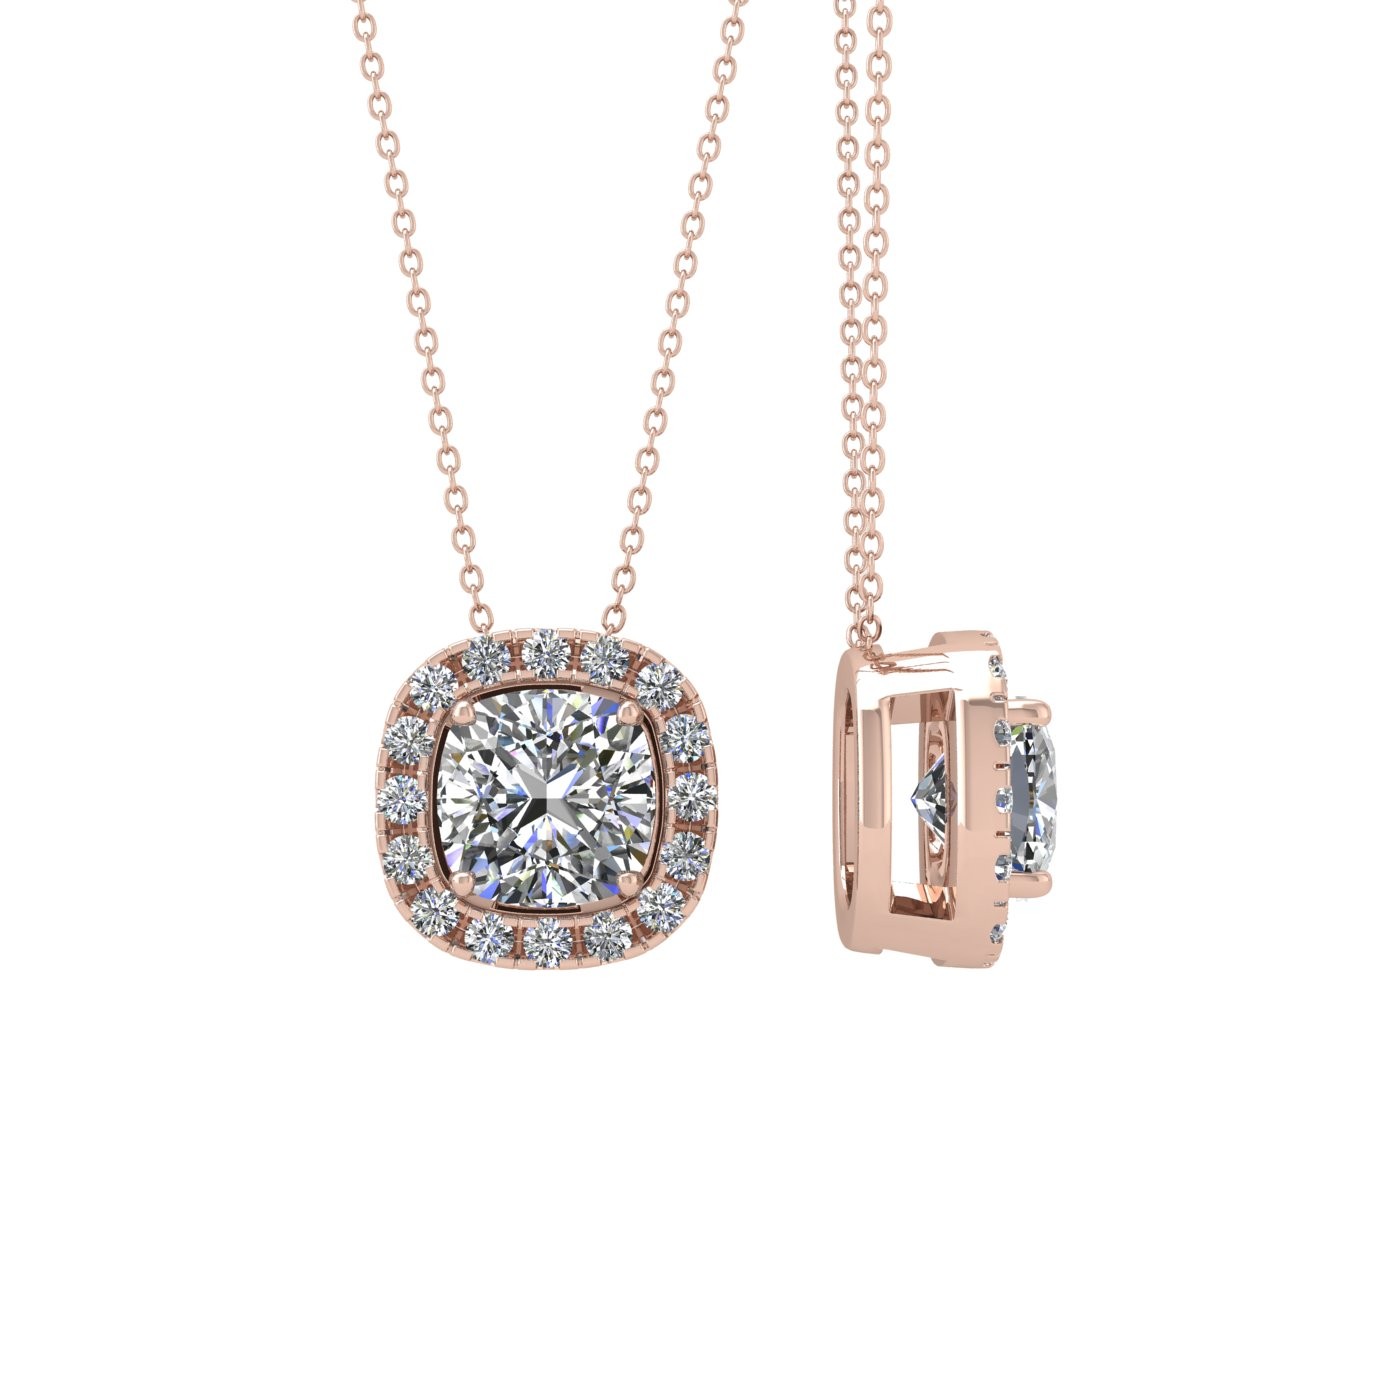 18k rose gold  0,7 ct 4 prongs cushion shape diamond pendant with diamond pavÉ set halo Photos & images